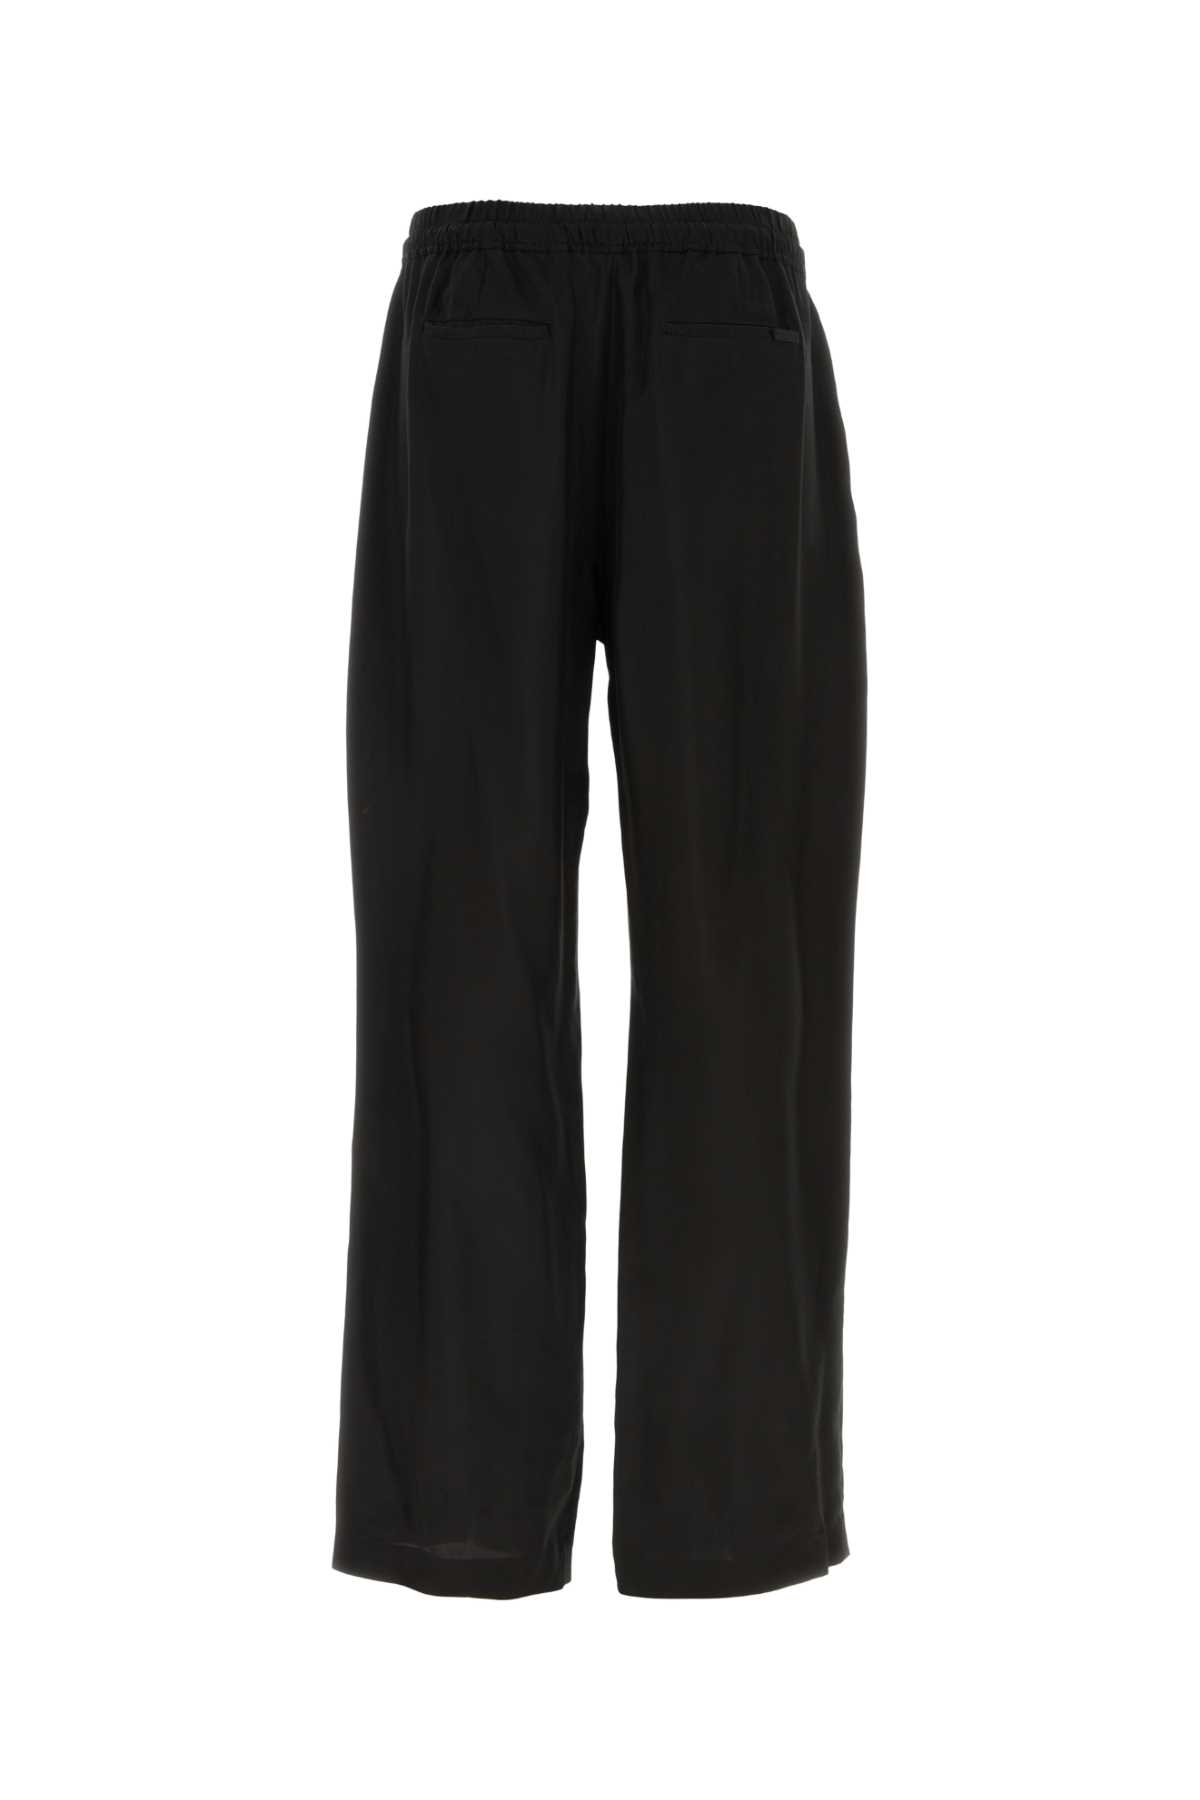 Saint Laurent Black Twill Pyjama Pant In Noir